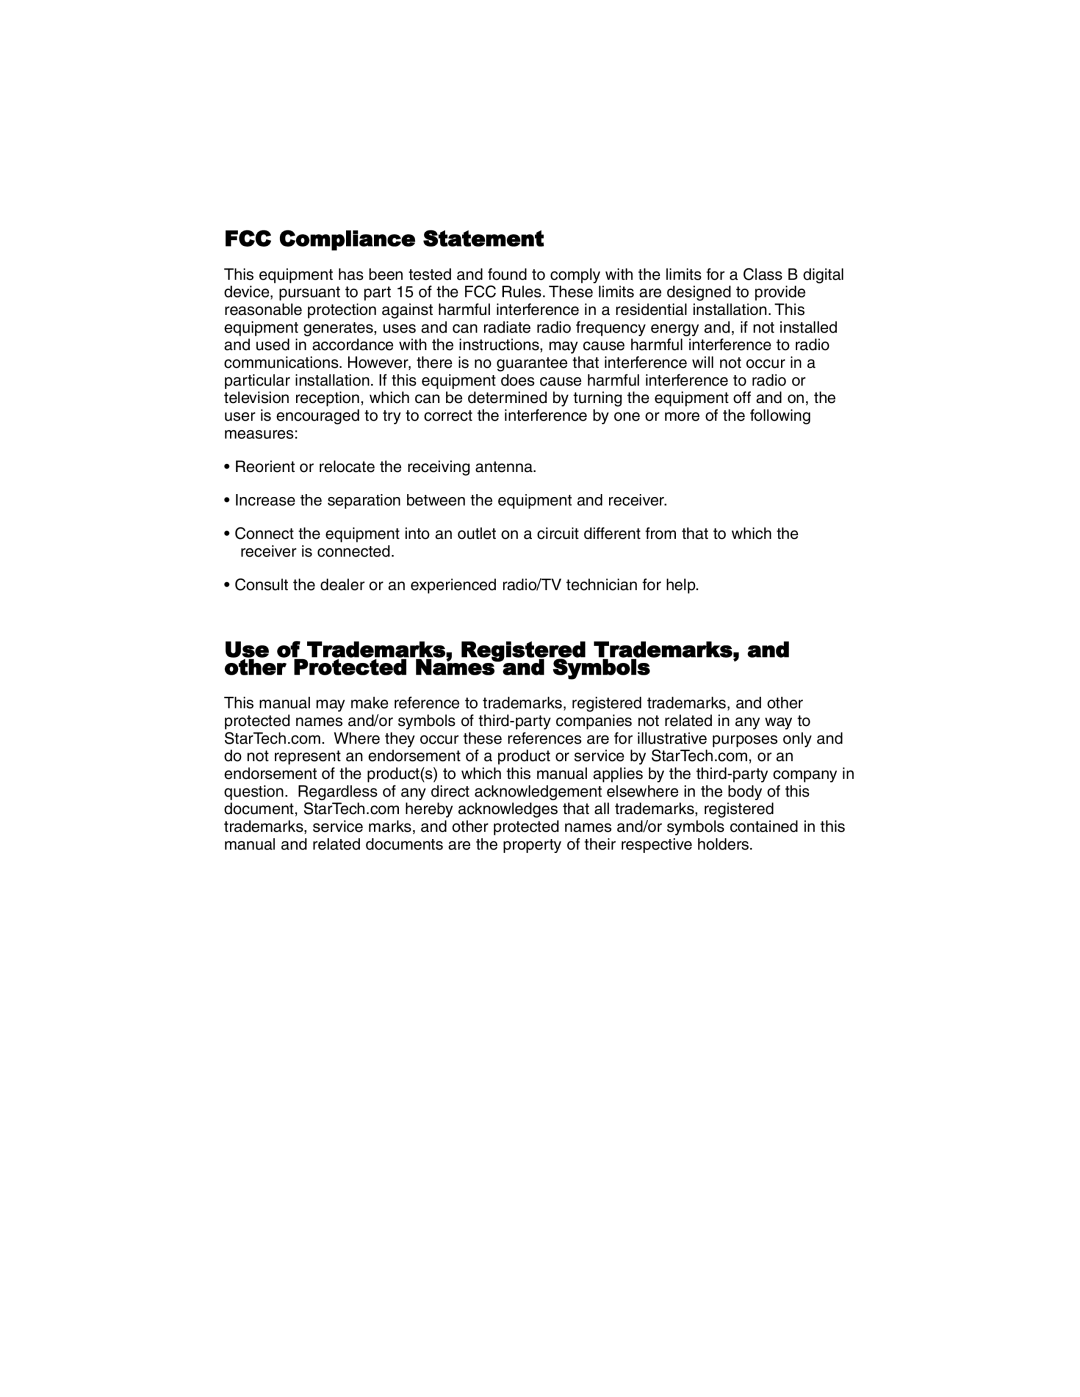 StarTech.com PCISOUND4CH instruction manual FCC Compliance Statement 